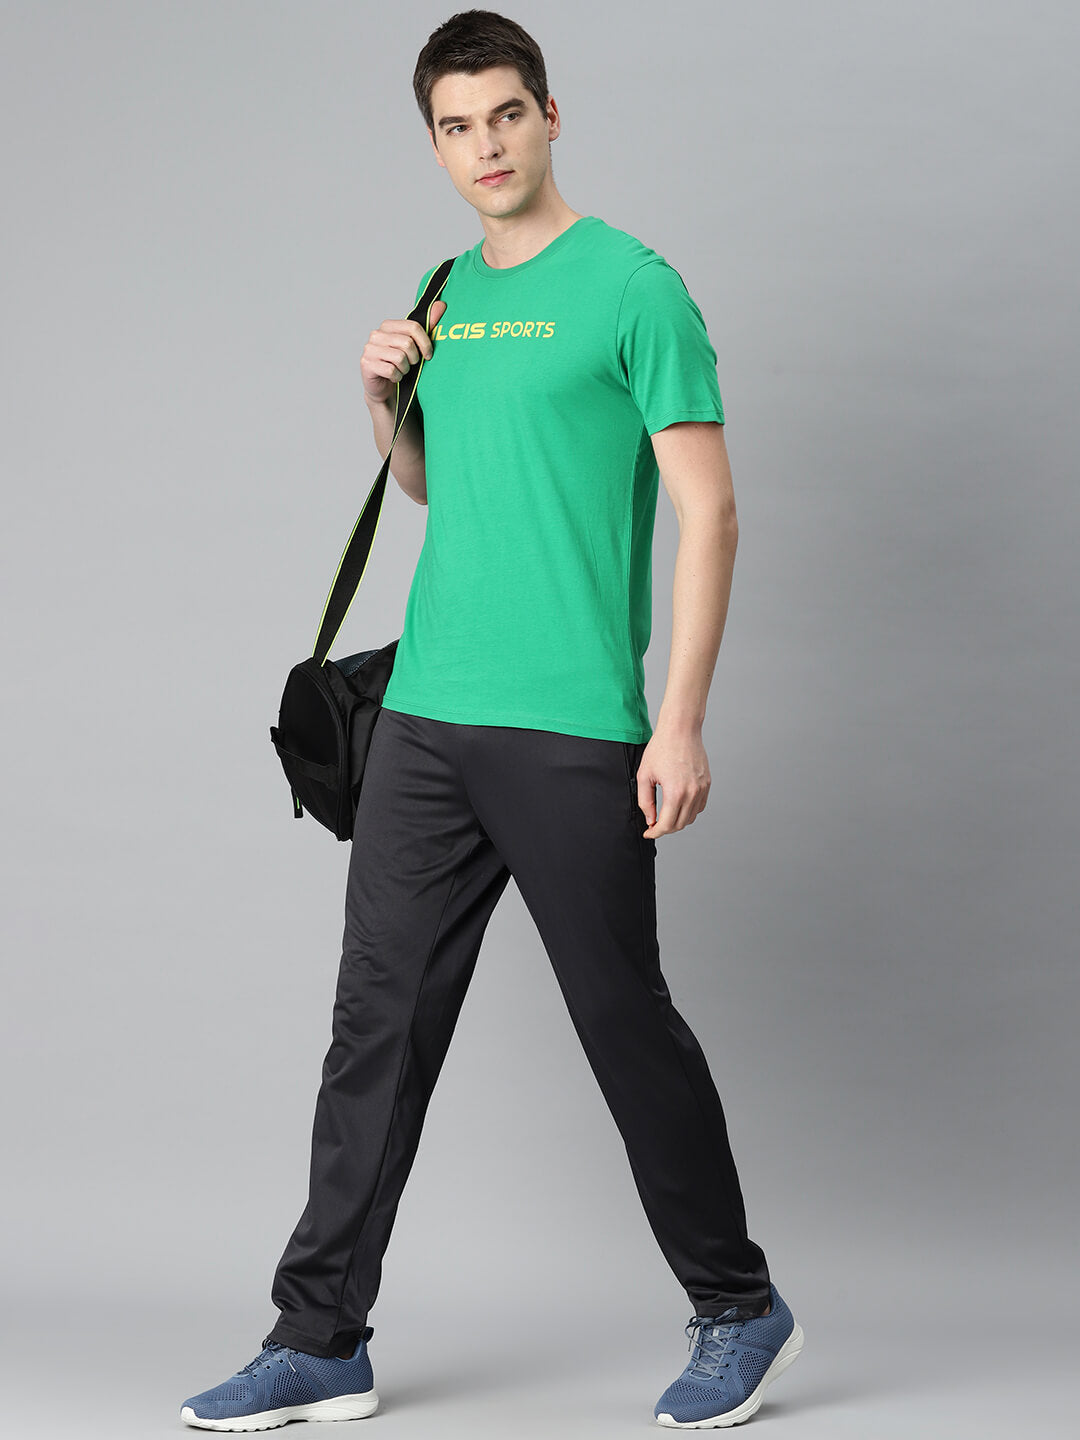 Alcis Men Green Typography Printed Sports T-shirt